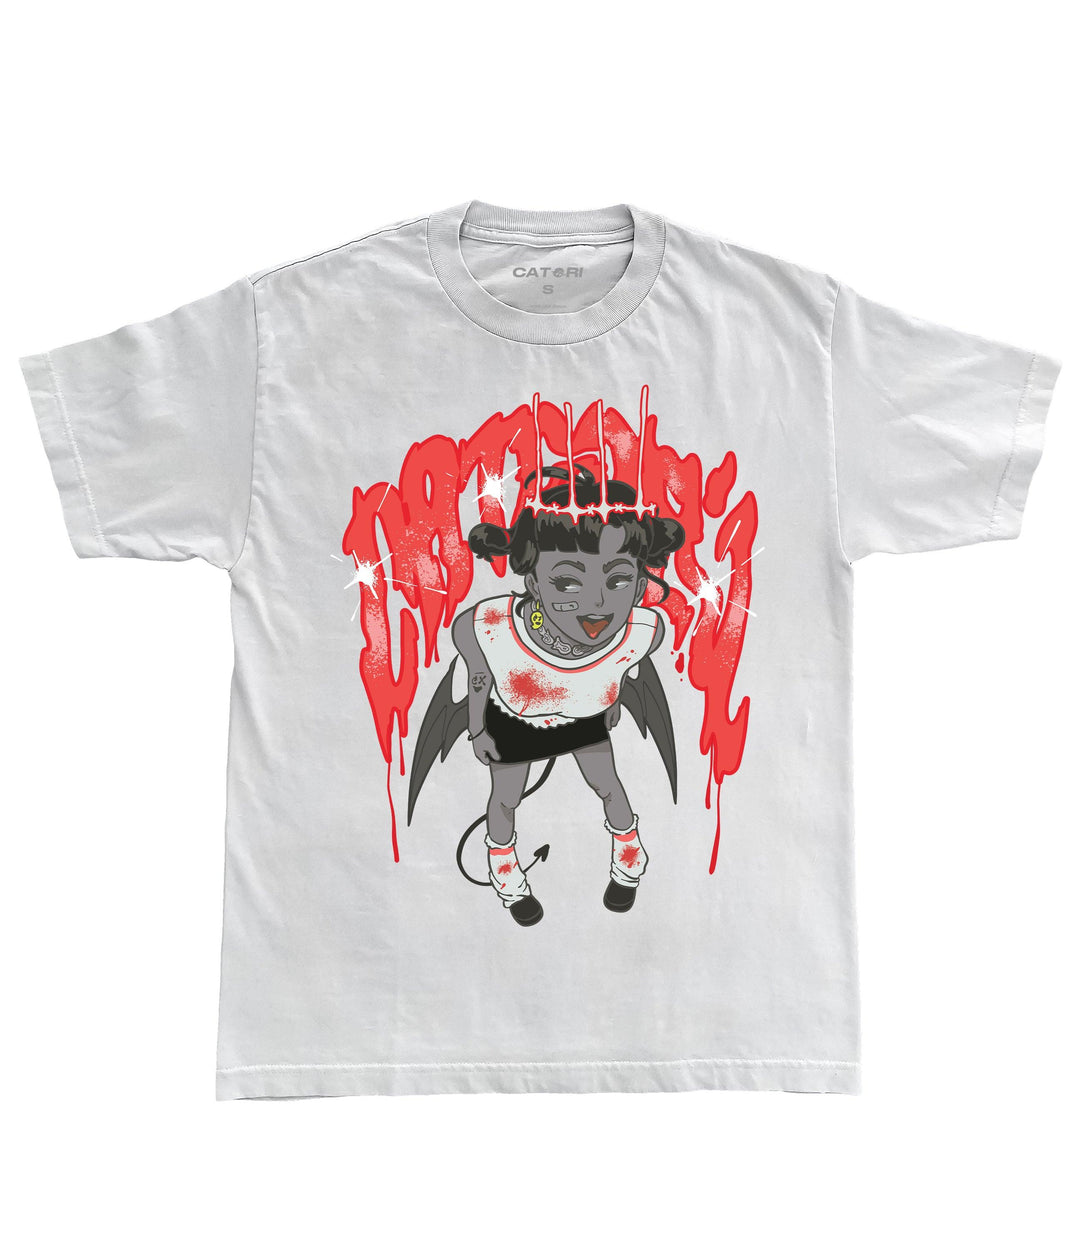 DG T-Shirt at Catori Clothing | Graphic & Anime Tees, Hoodies & Sweatshirts 